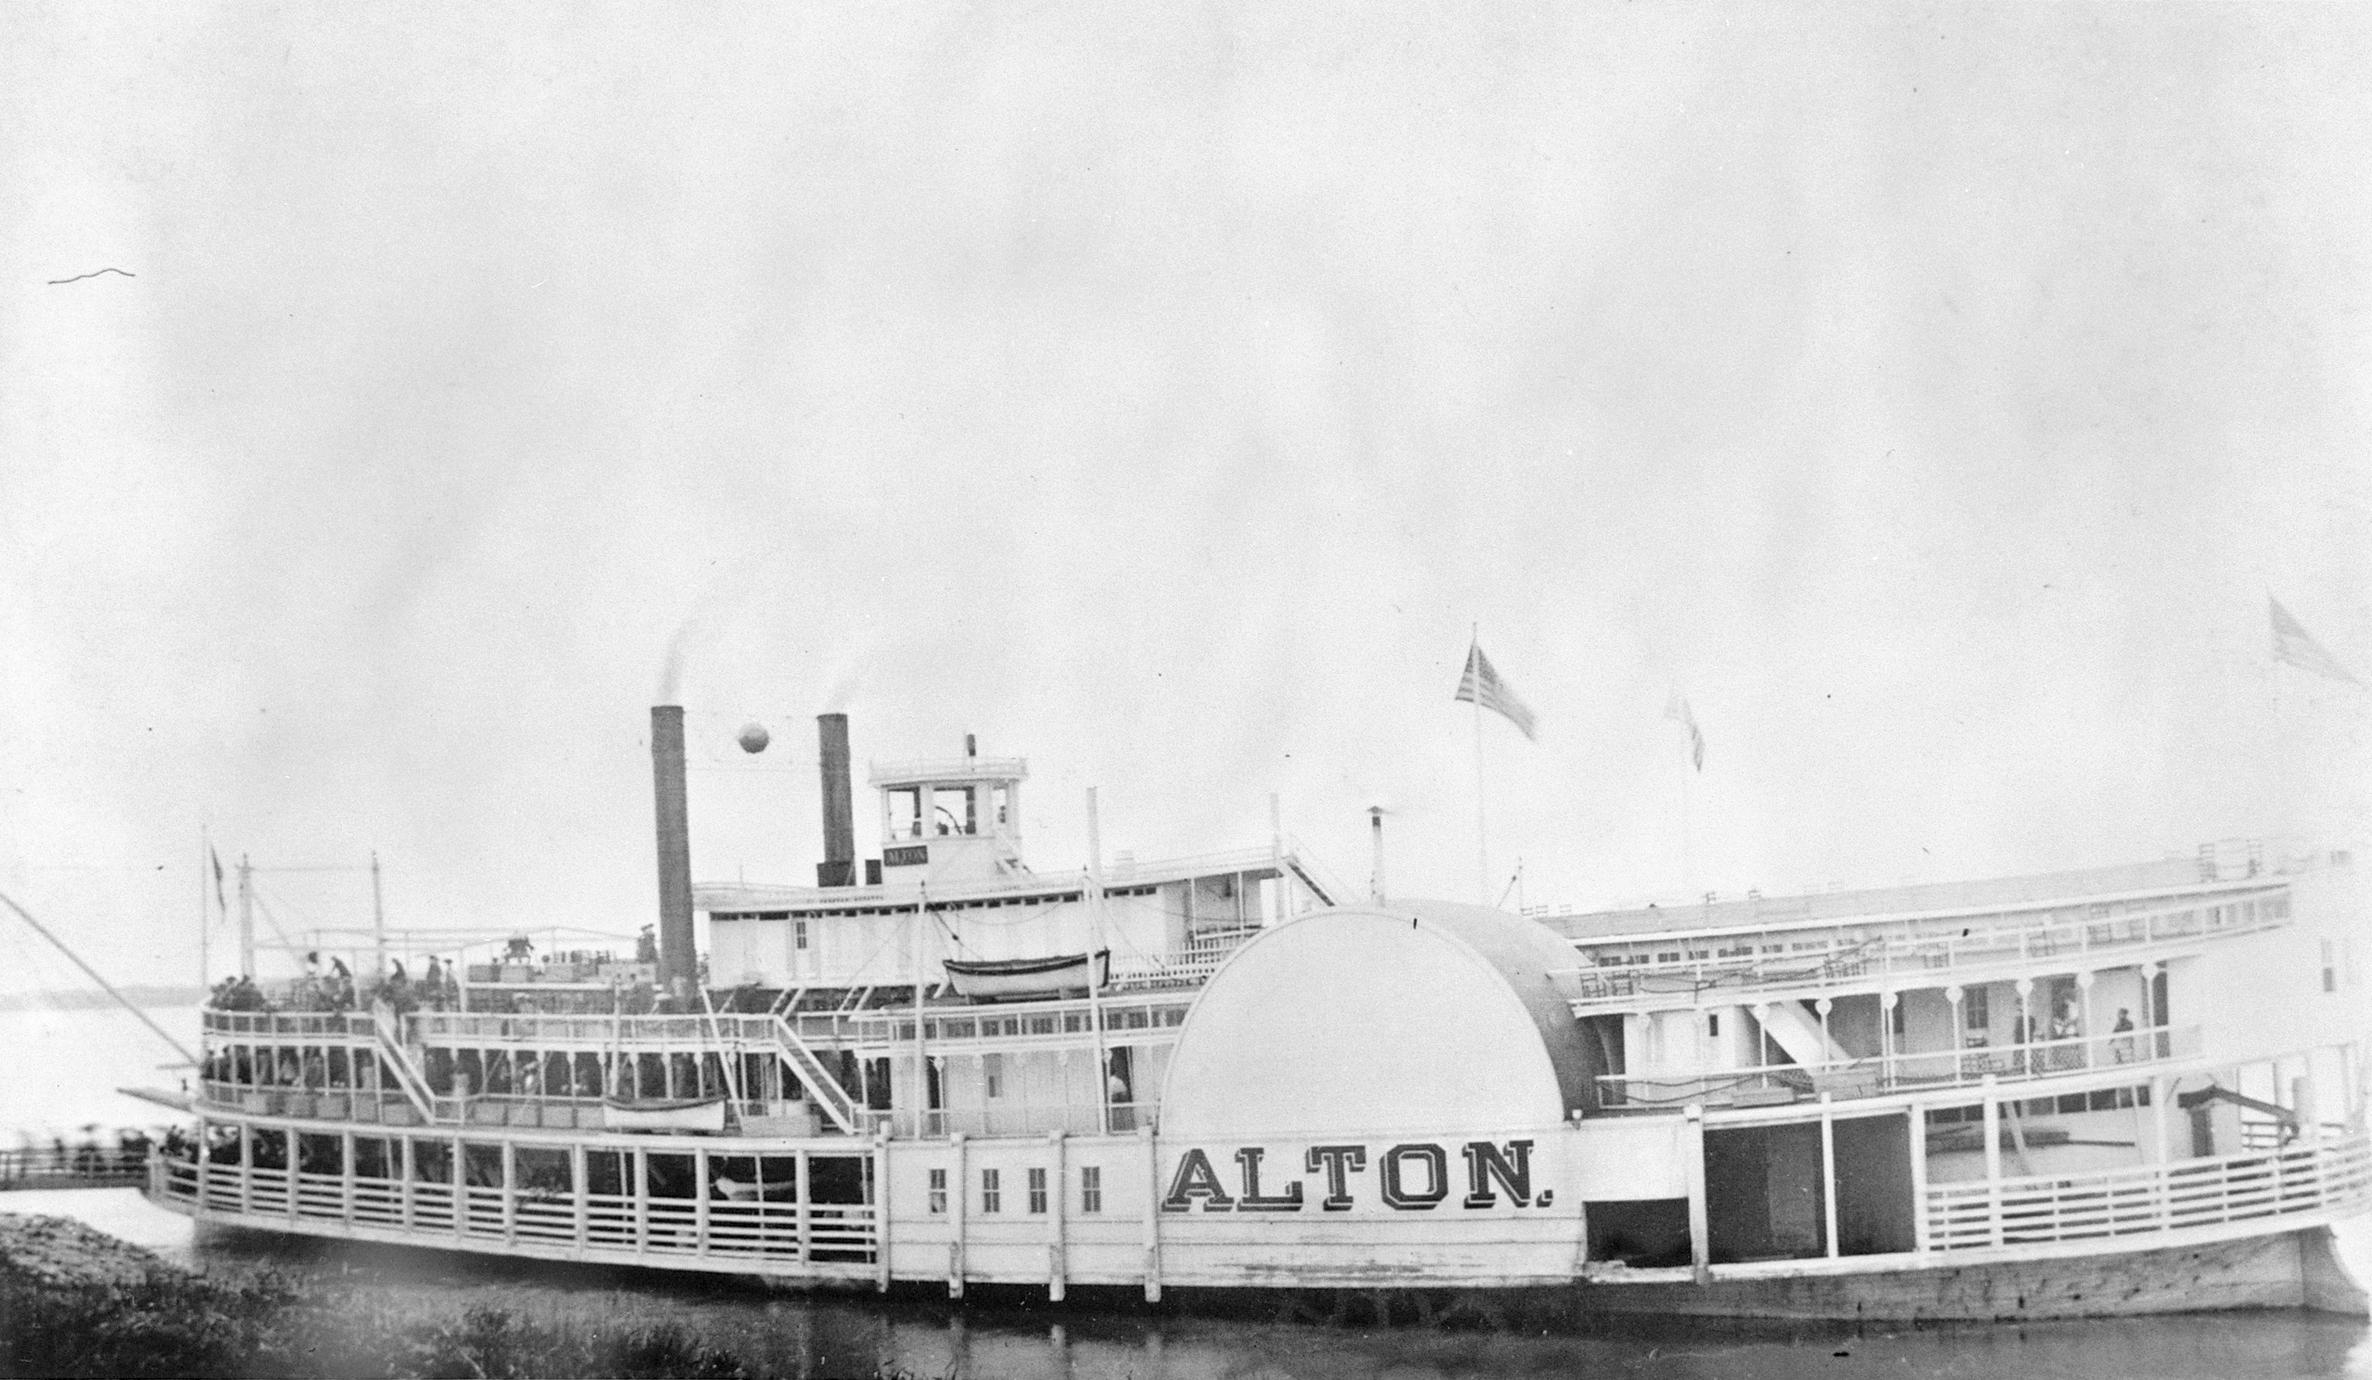 Alton (Packet, Excursion, 1906-1918)